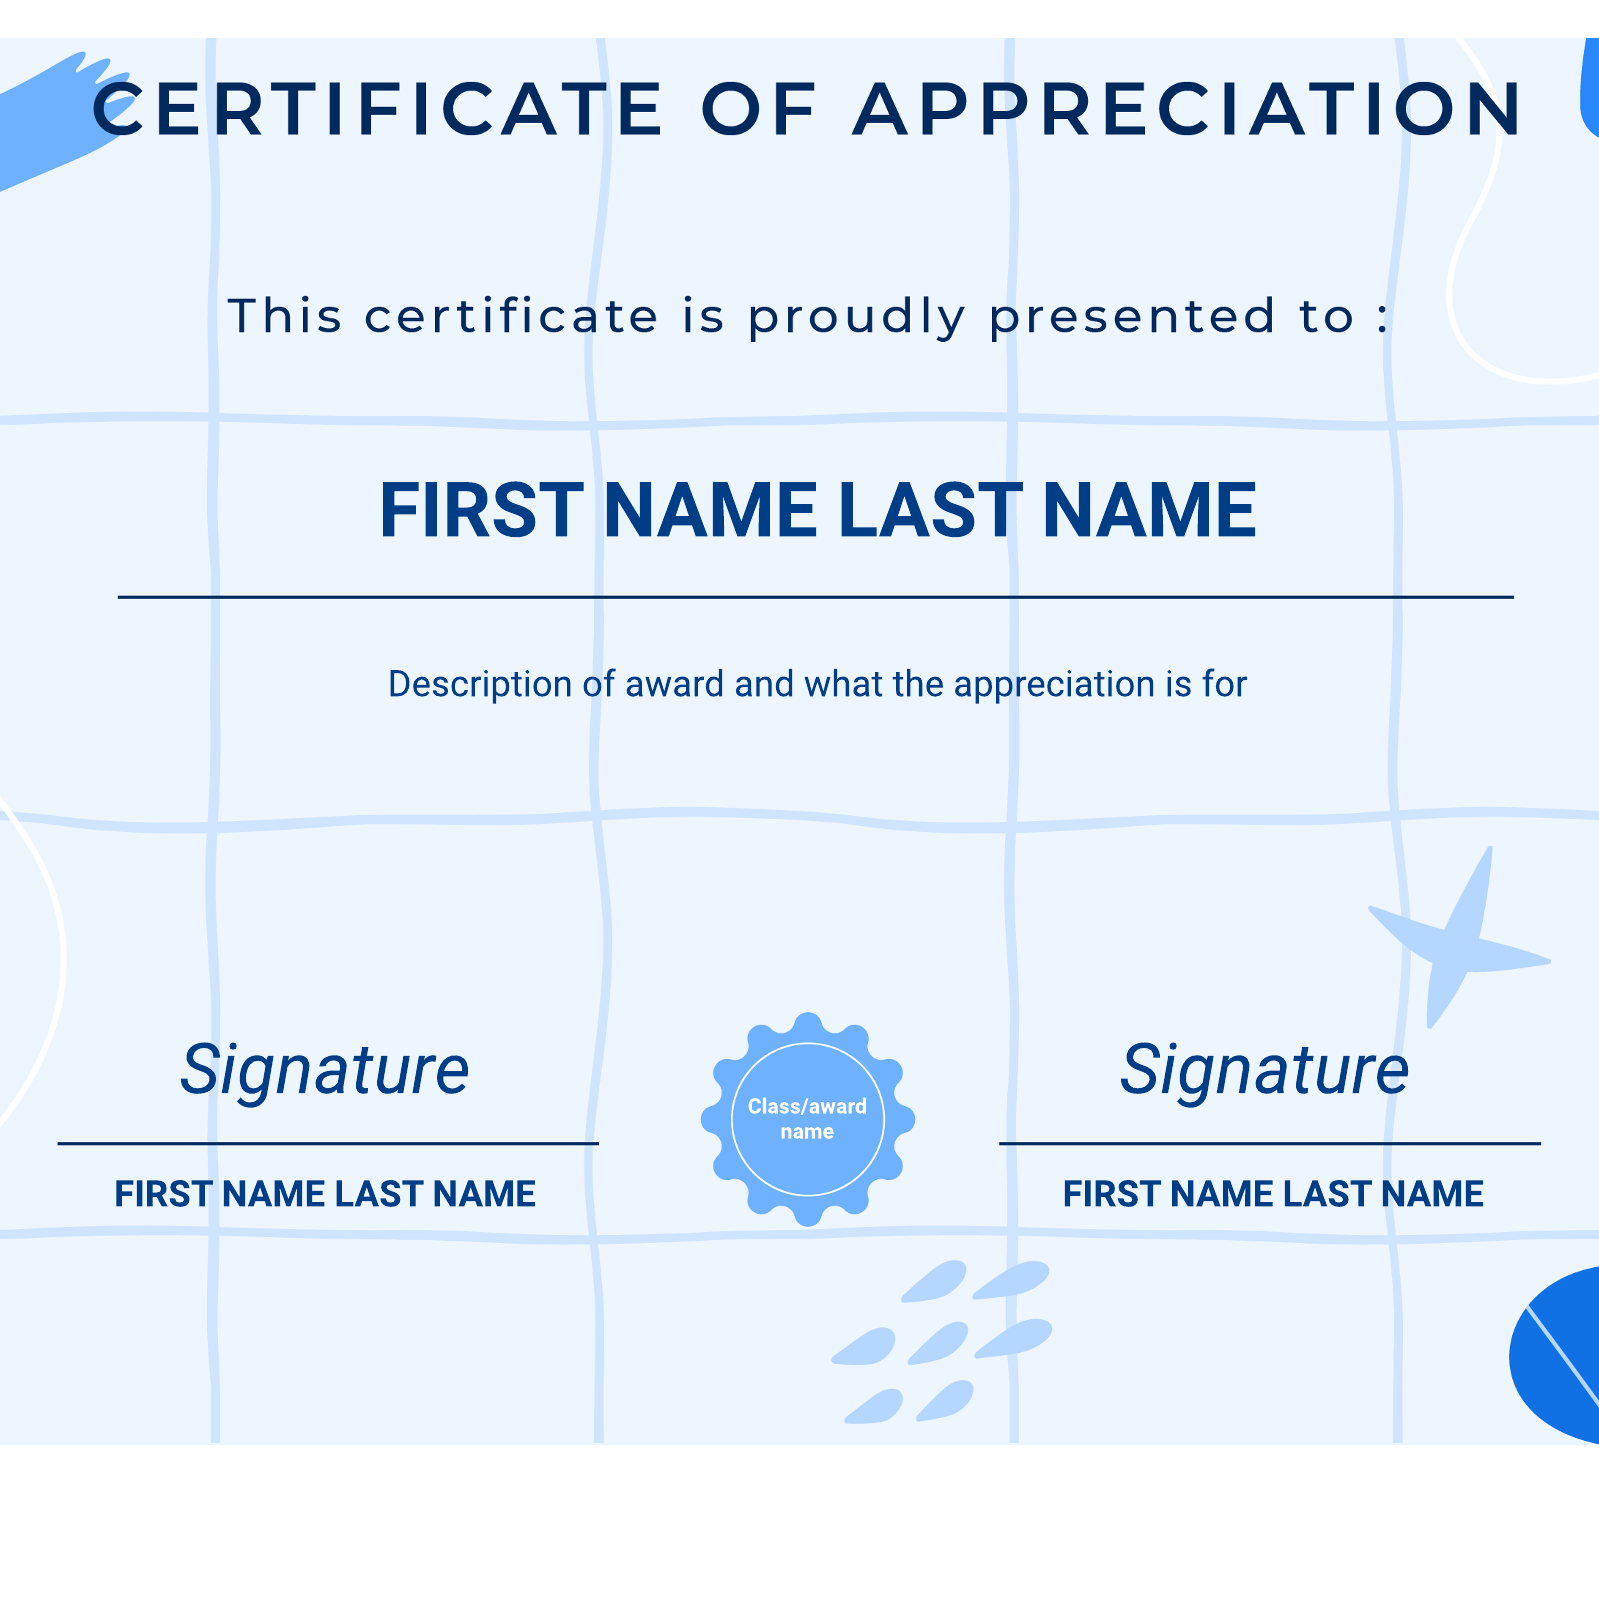 Certificate of appreciation example